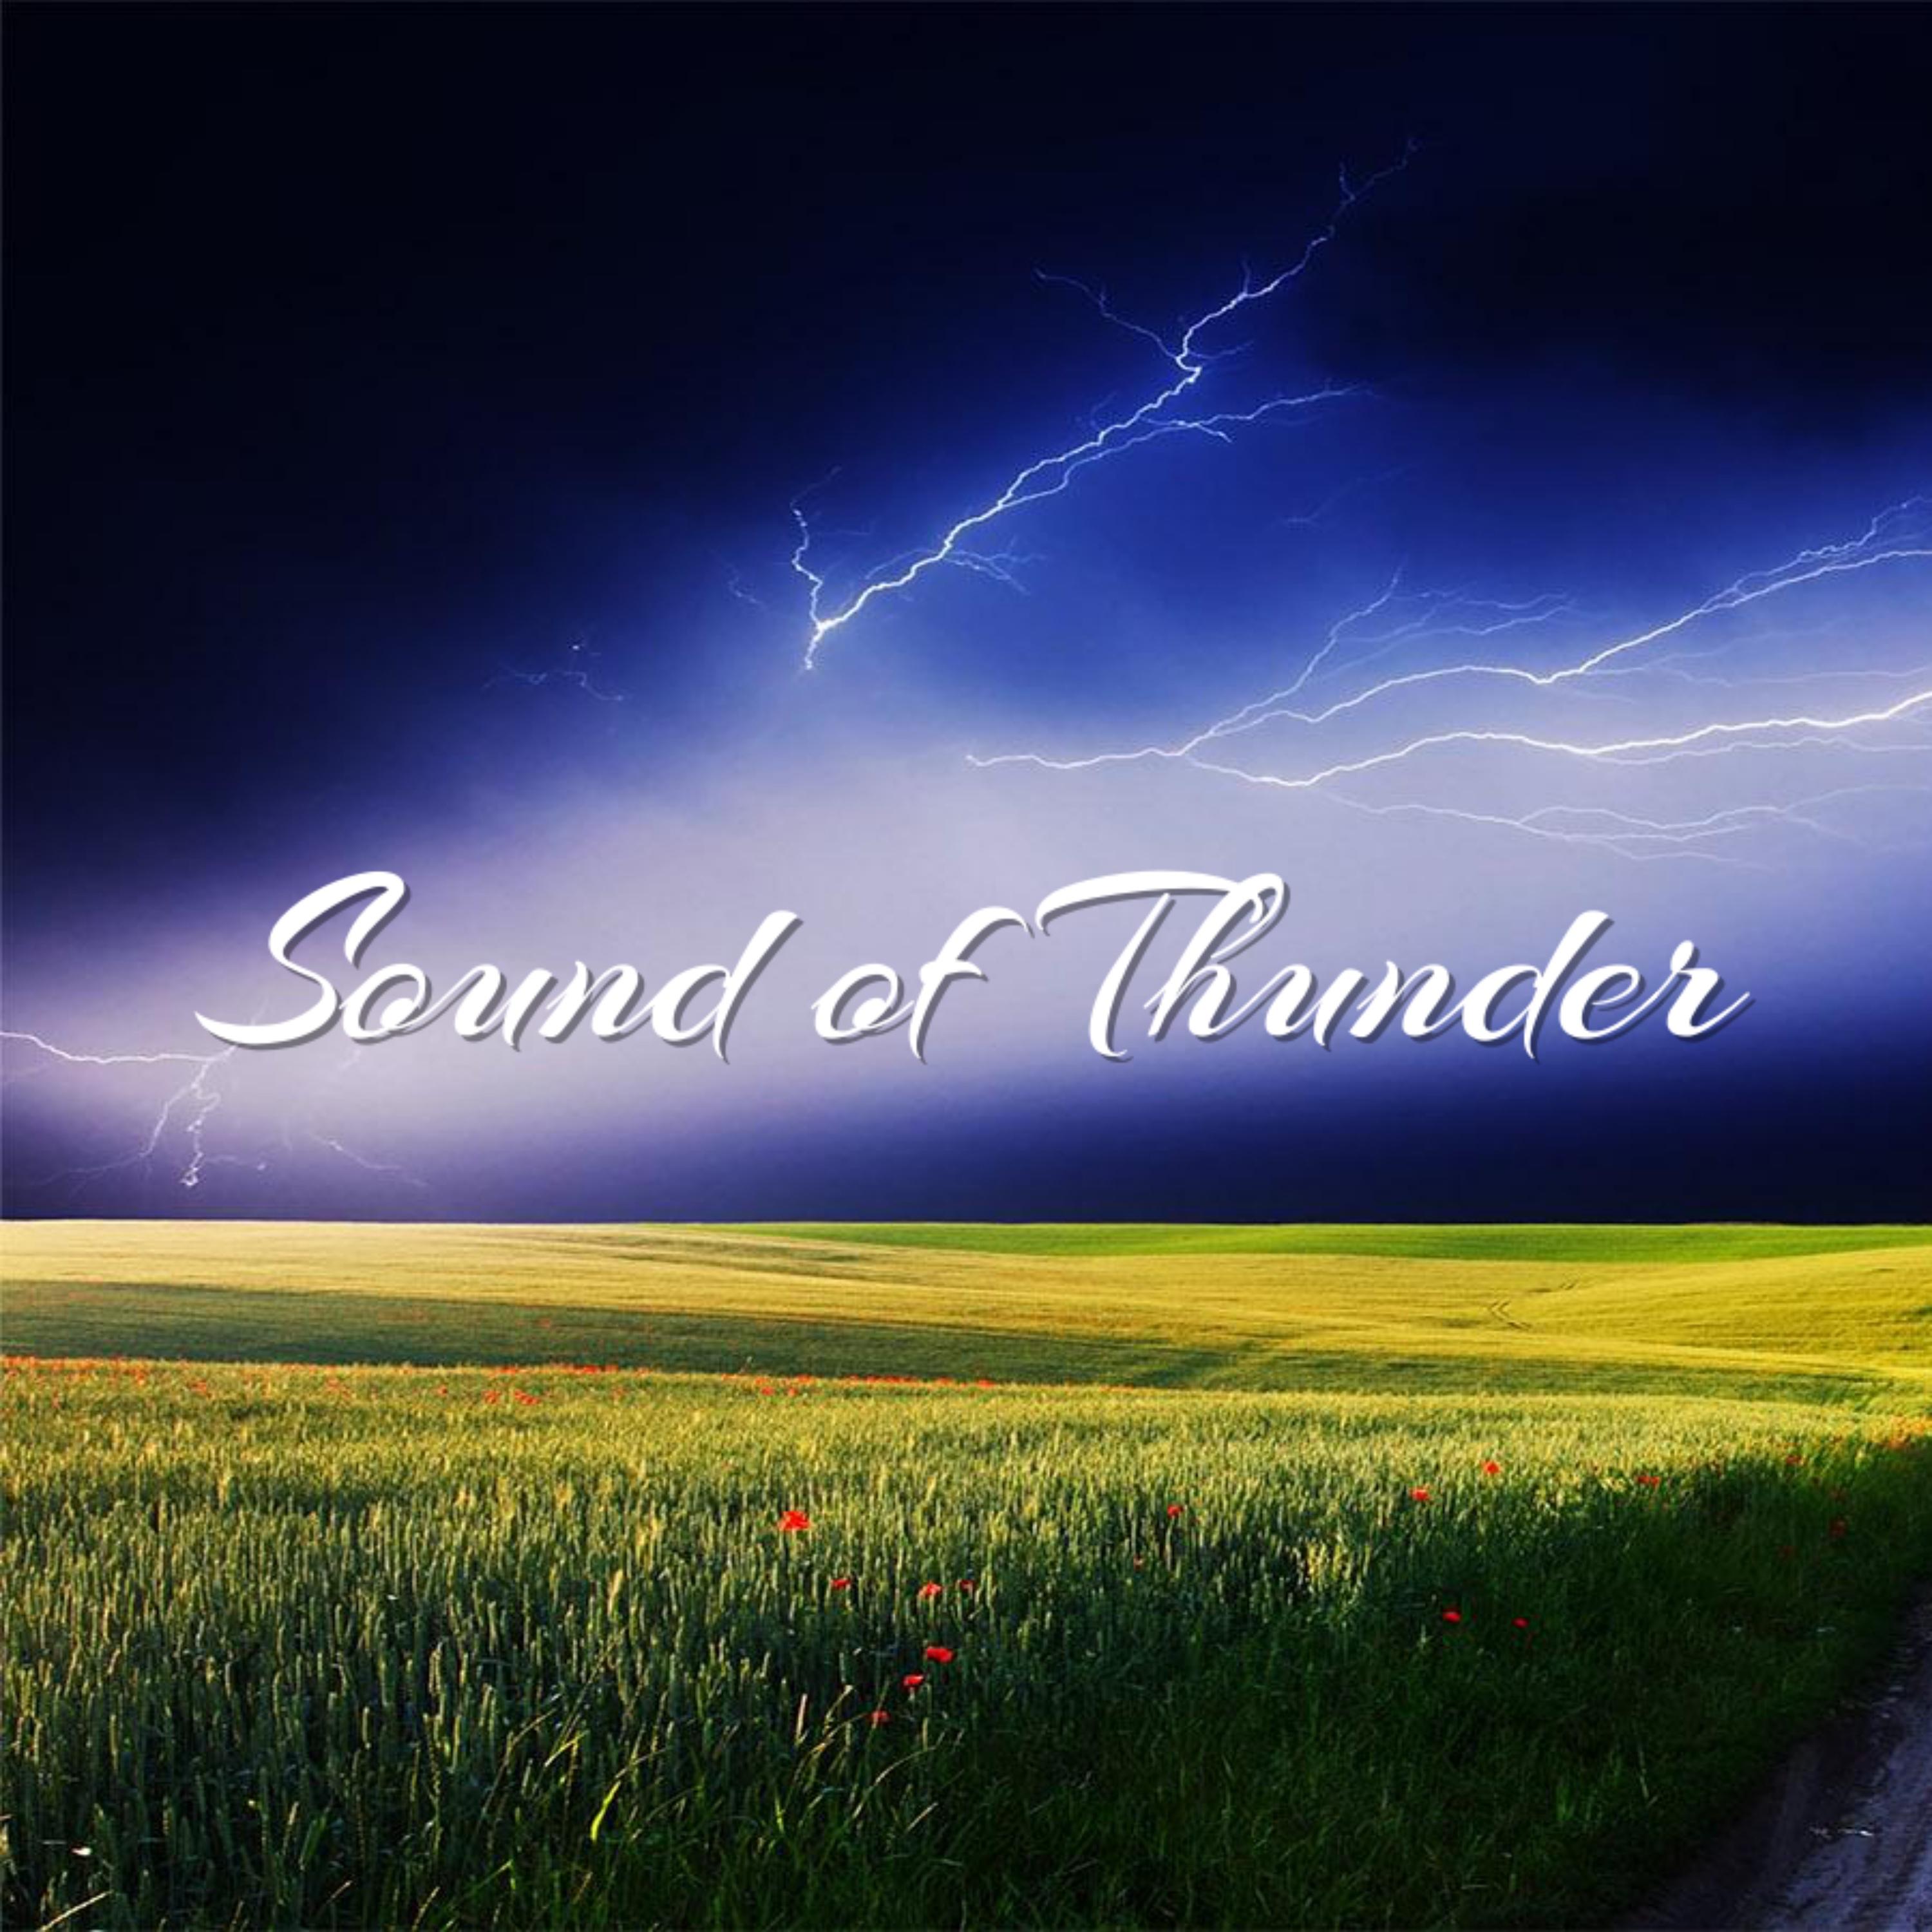 Sound of Thunder